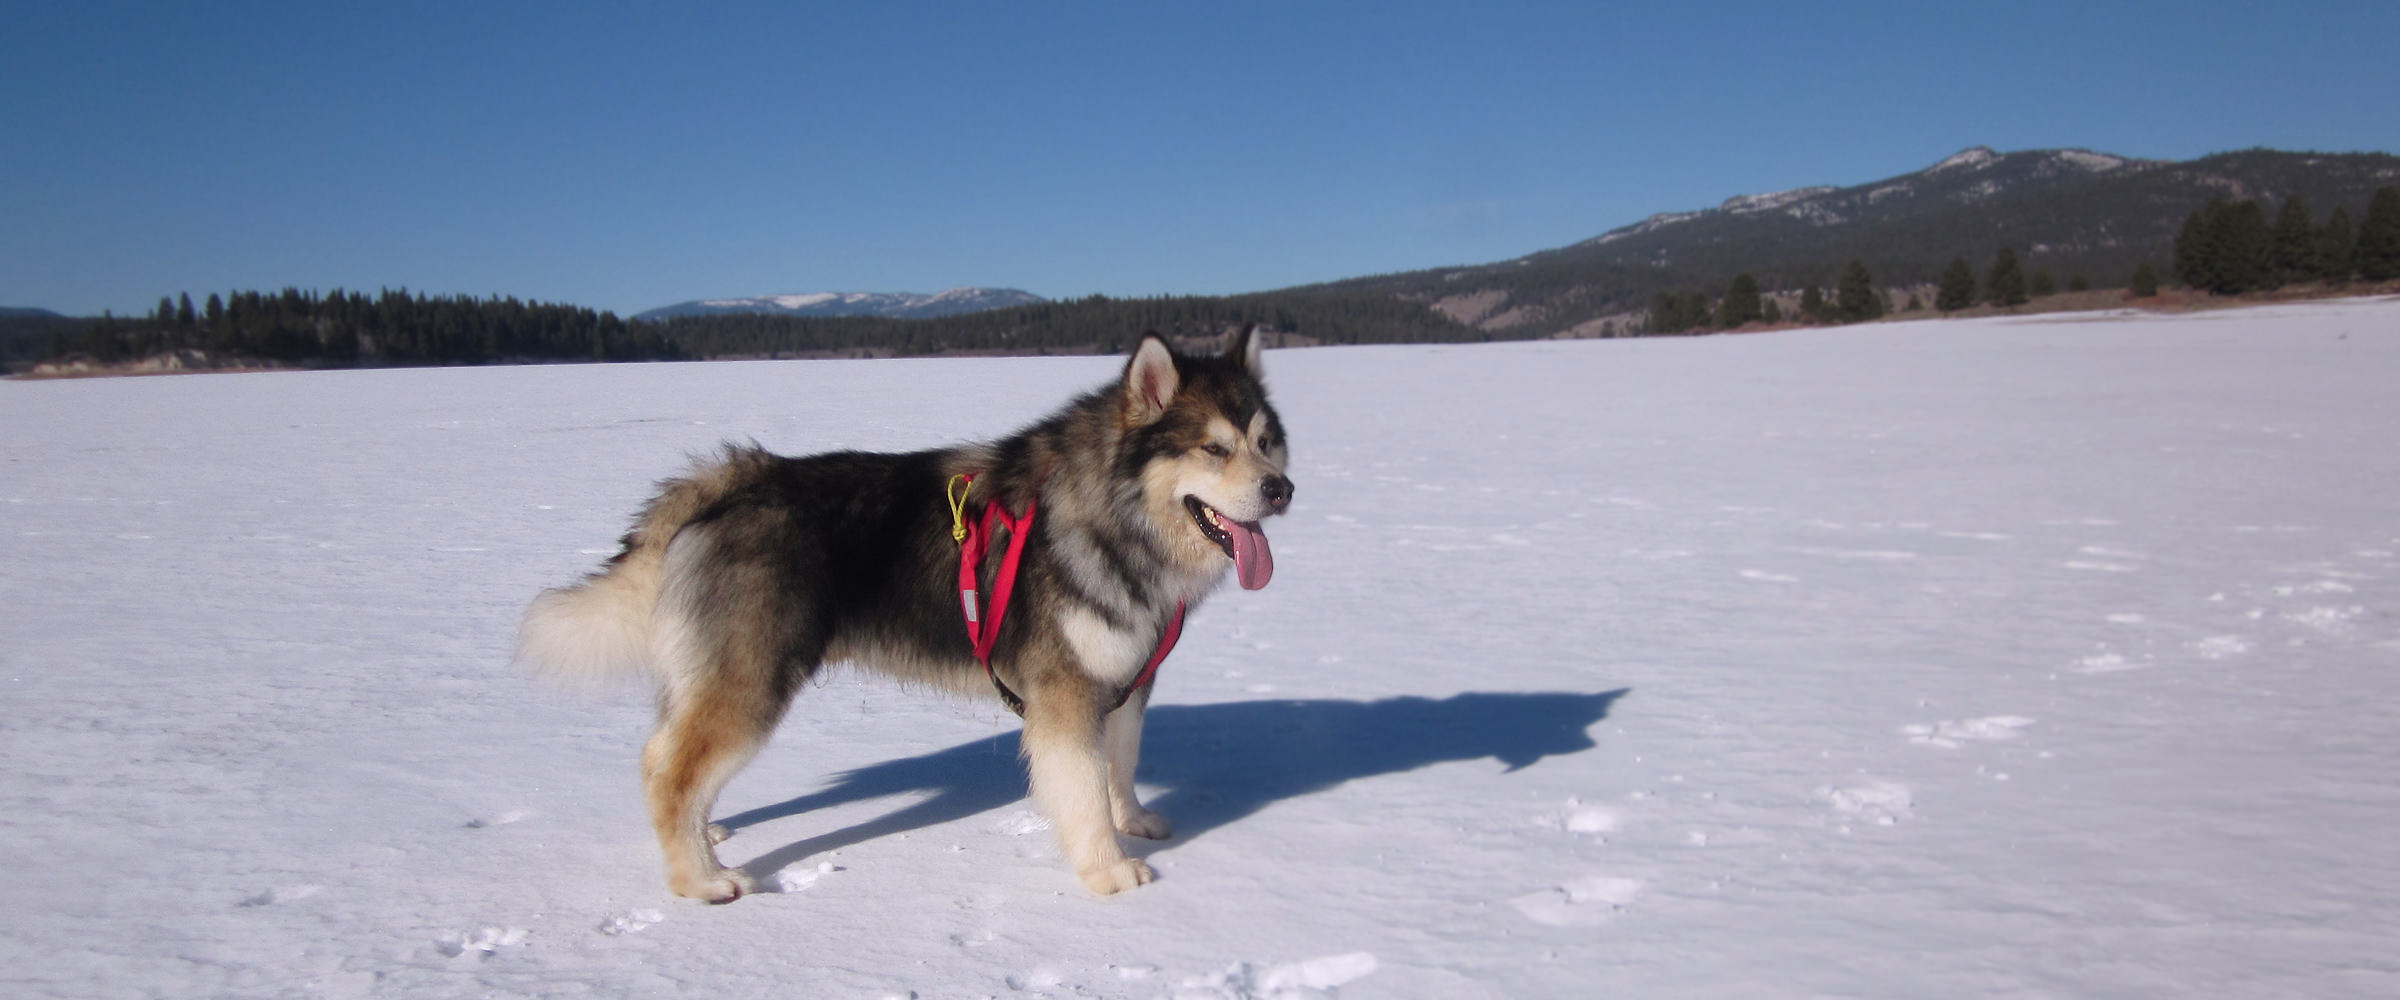 Ch Jake Snowlion Alaskan Malamute frozen sire stud dog